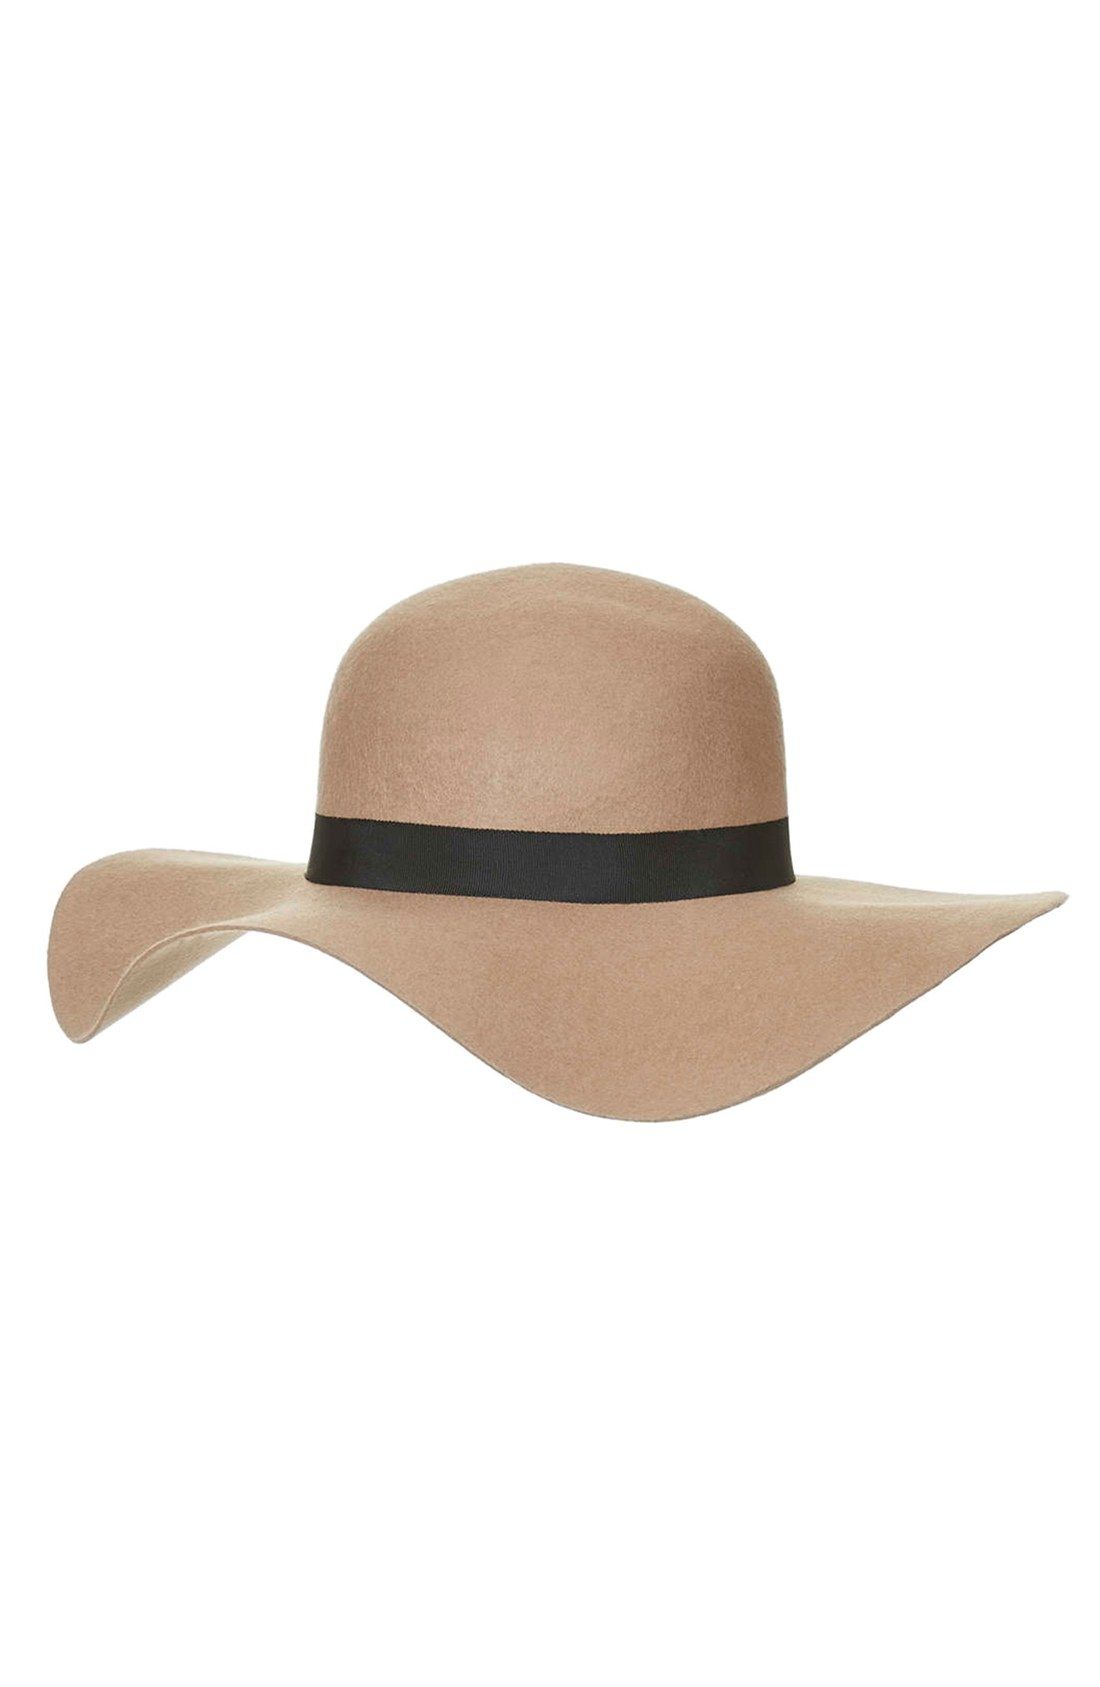 Topshop Floppy Wool Felt Hat | Nordstrom